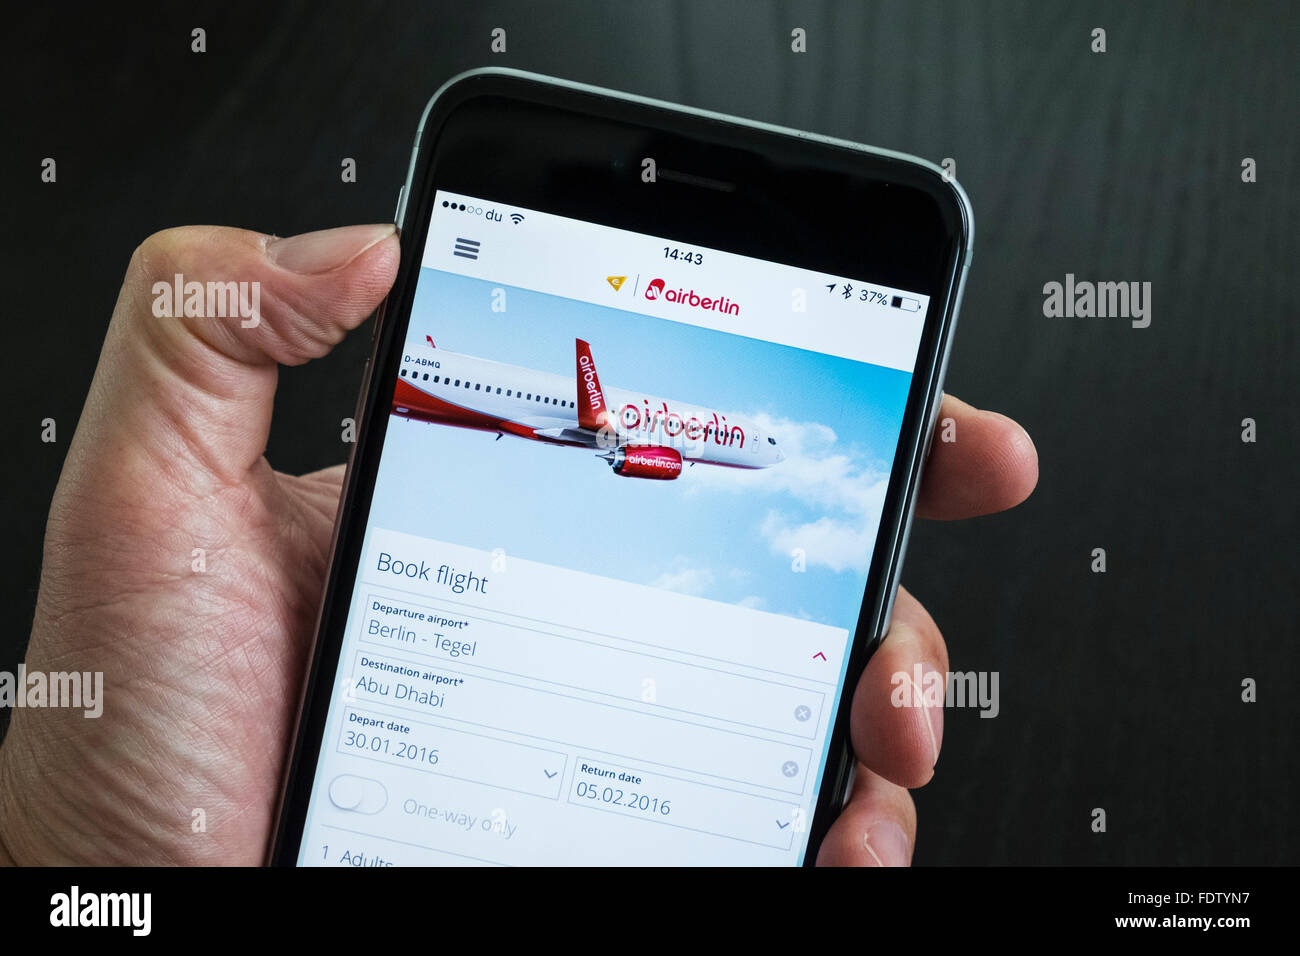 Airberlin flight booking app on an iPhone 6 plus smart phone Stock Photo